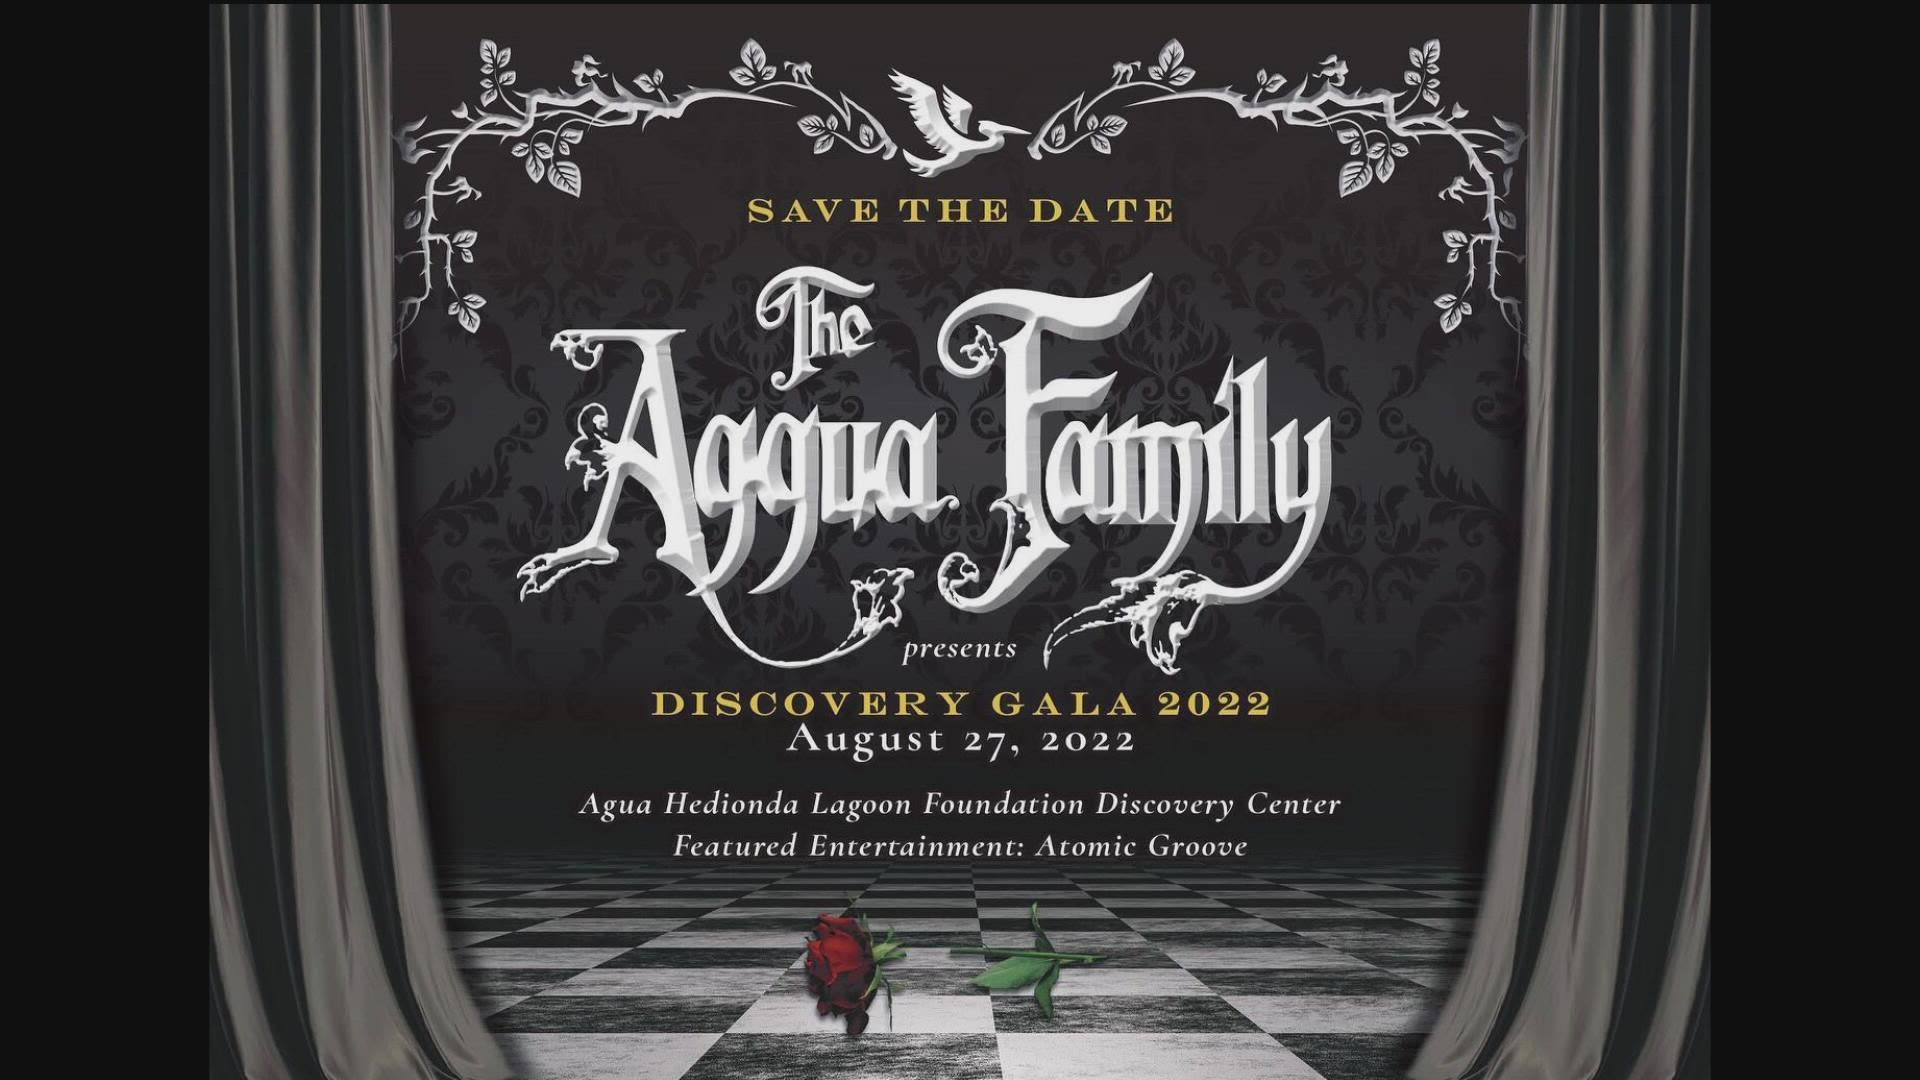 Agua Hedionda Lagoon Foundation Presents: Discovery Gala 2022 & Aggua Family Fun Fest! Visit: www.aguahedionda.org/discovery-gala-2022